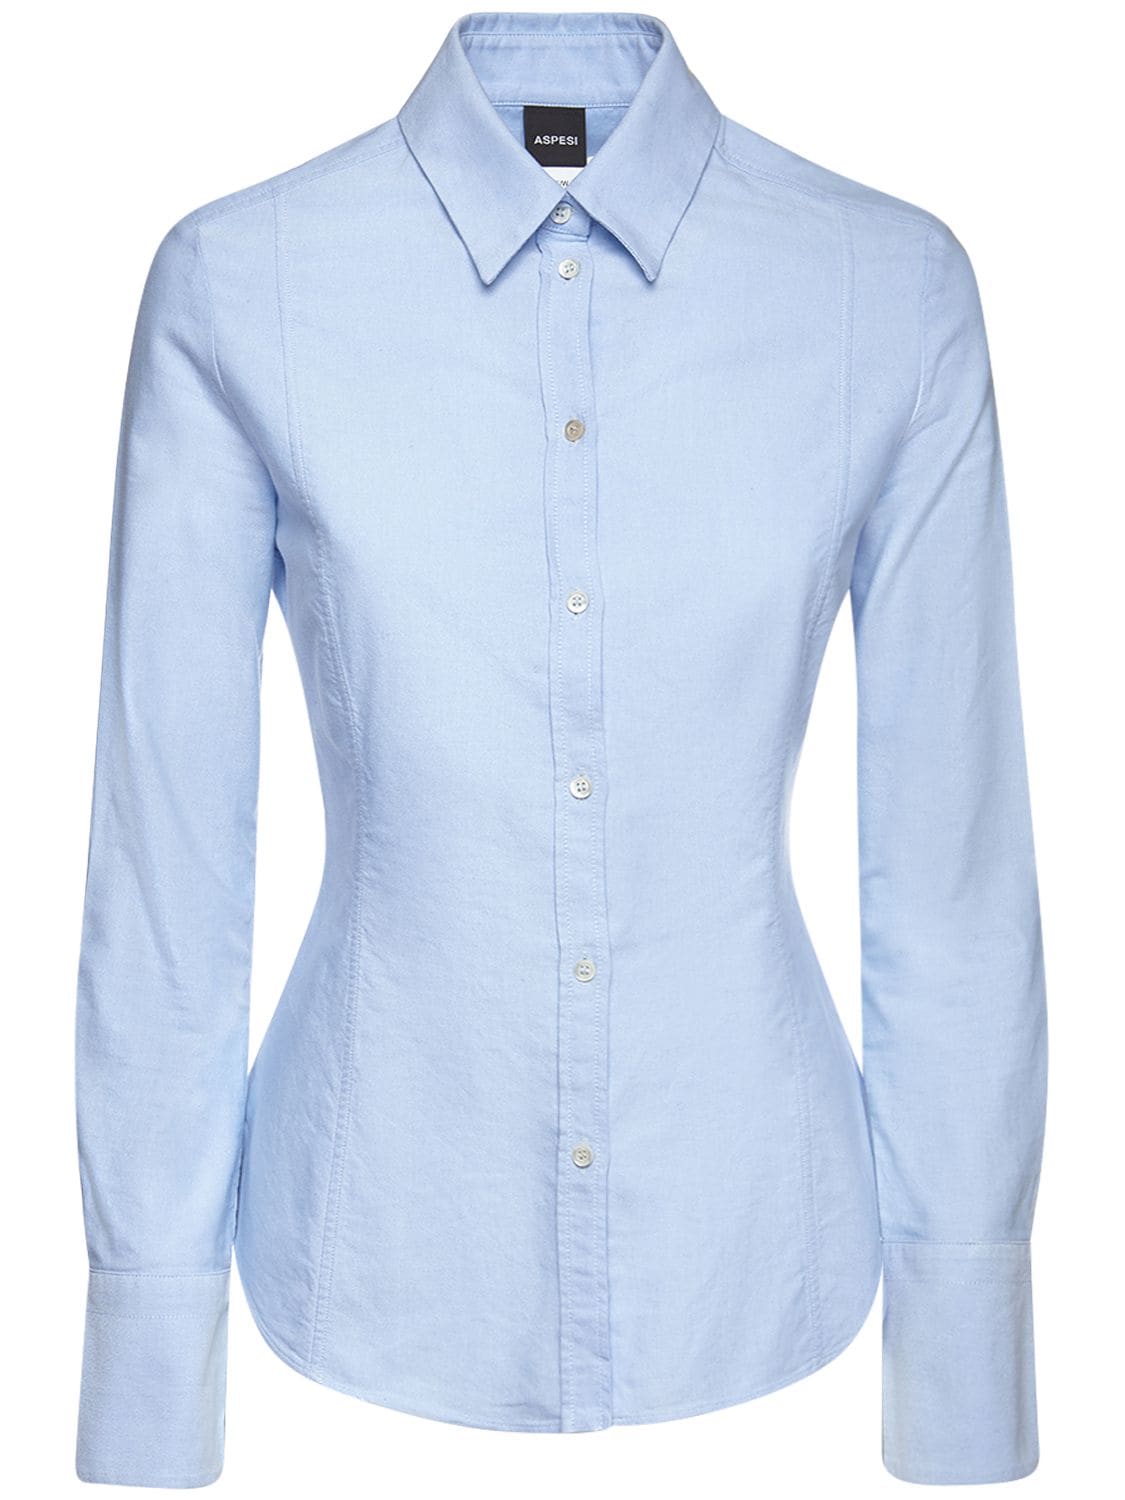 Aspesi Cotton Oxford Shirt In Light Blue